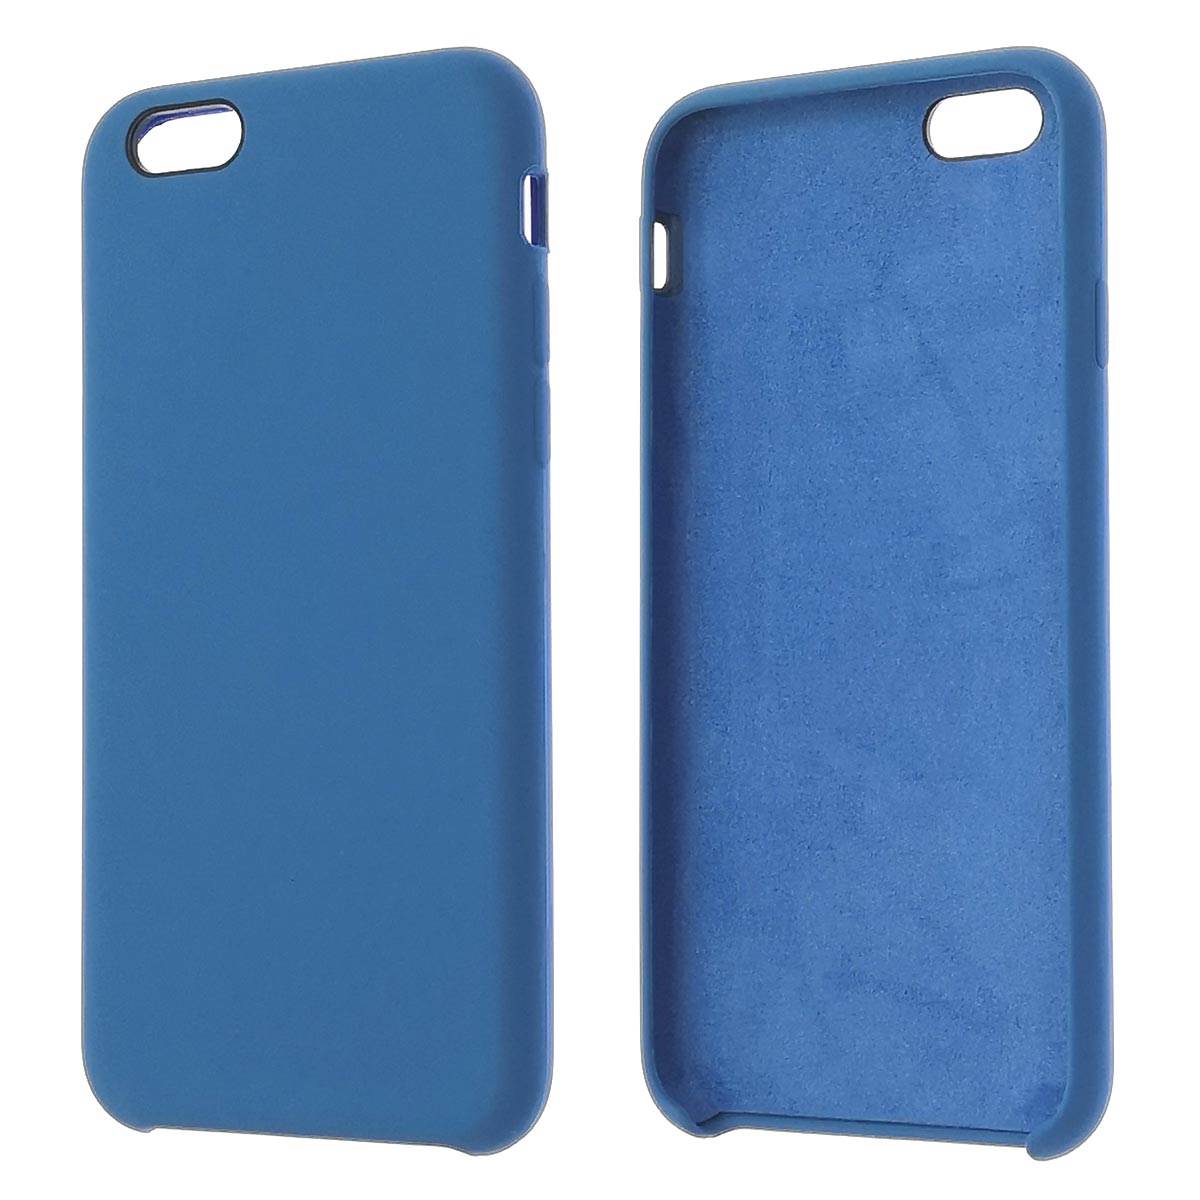 Чехол накладка Silicon Case для APPLE iPhone 6, iPhone 6S, силикон, бархат, цвет синий океан.